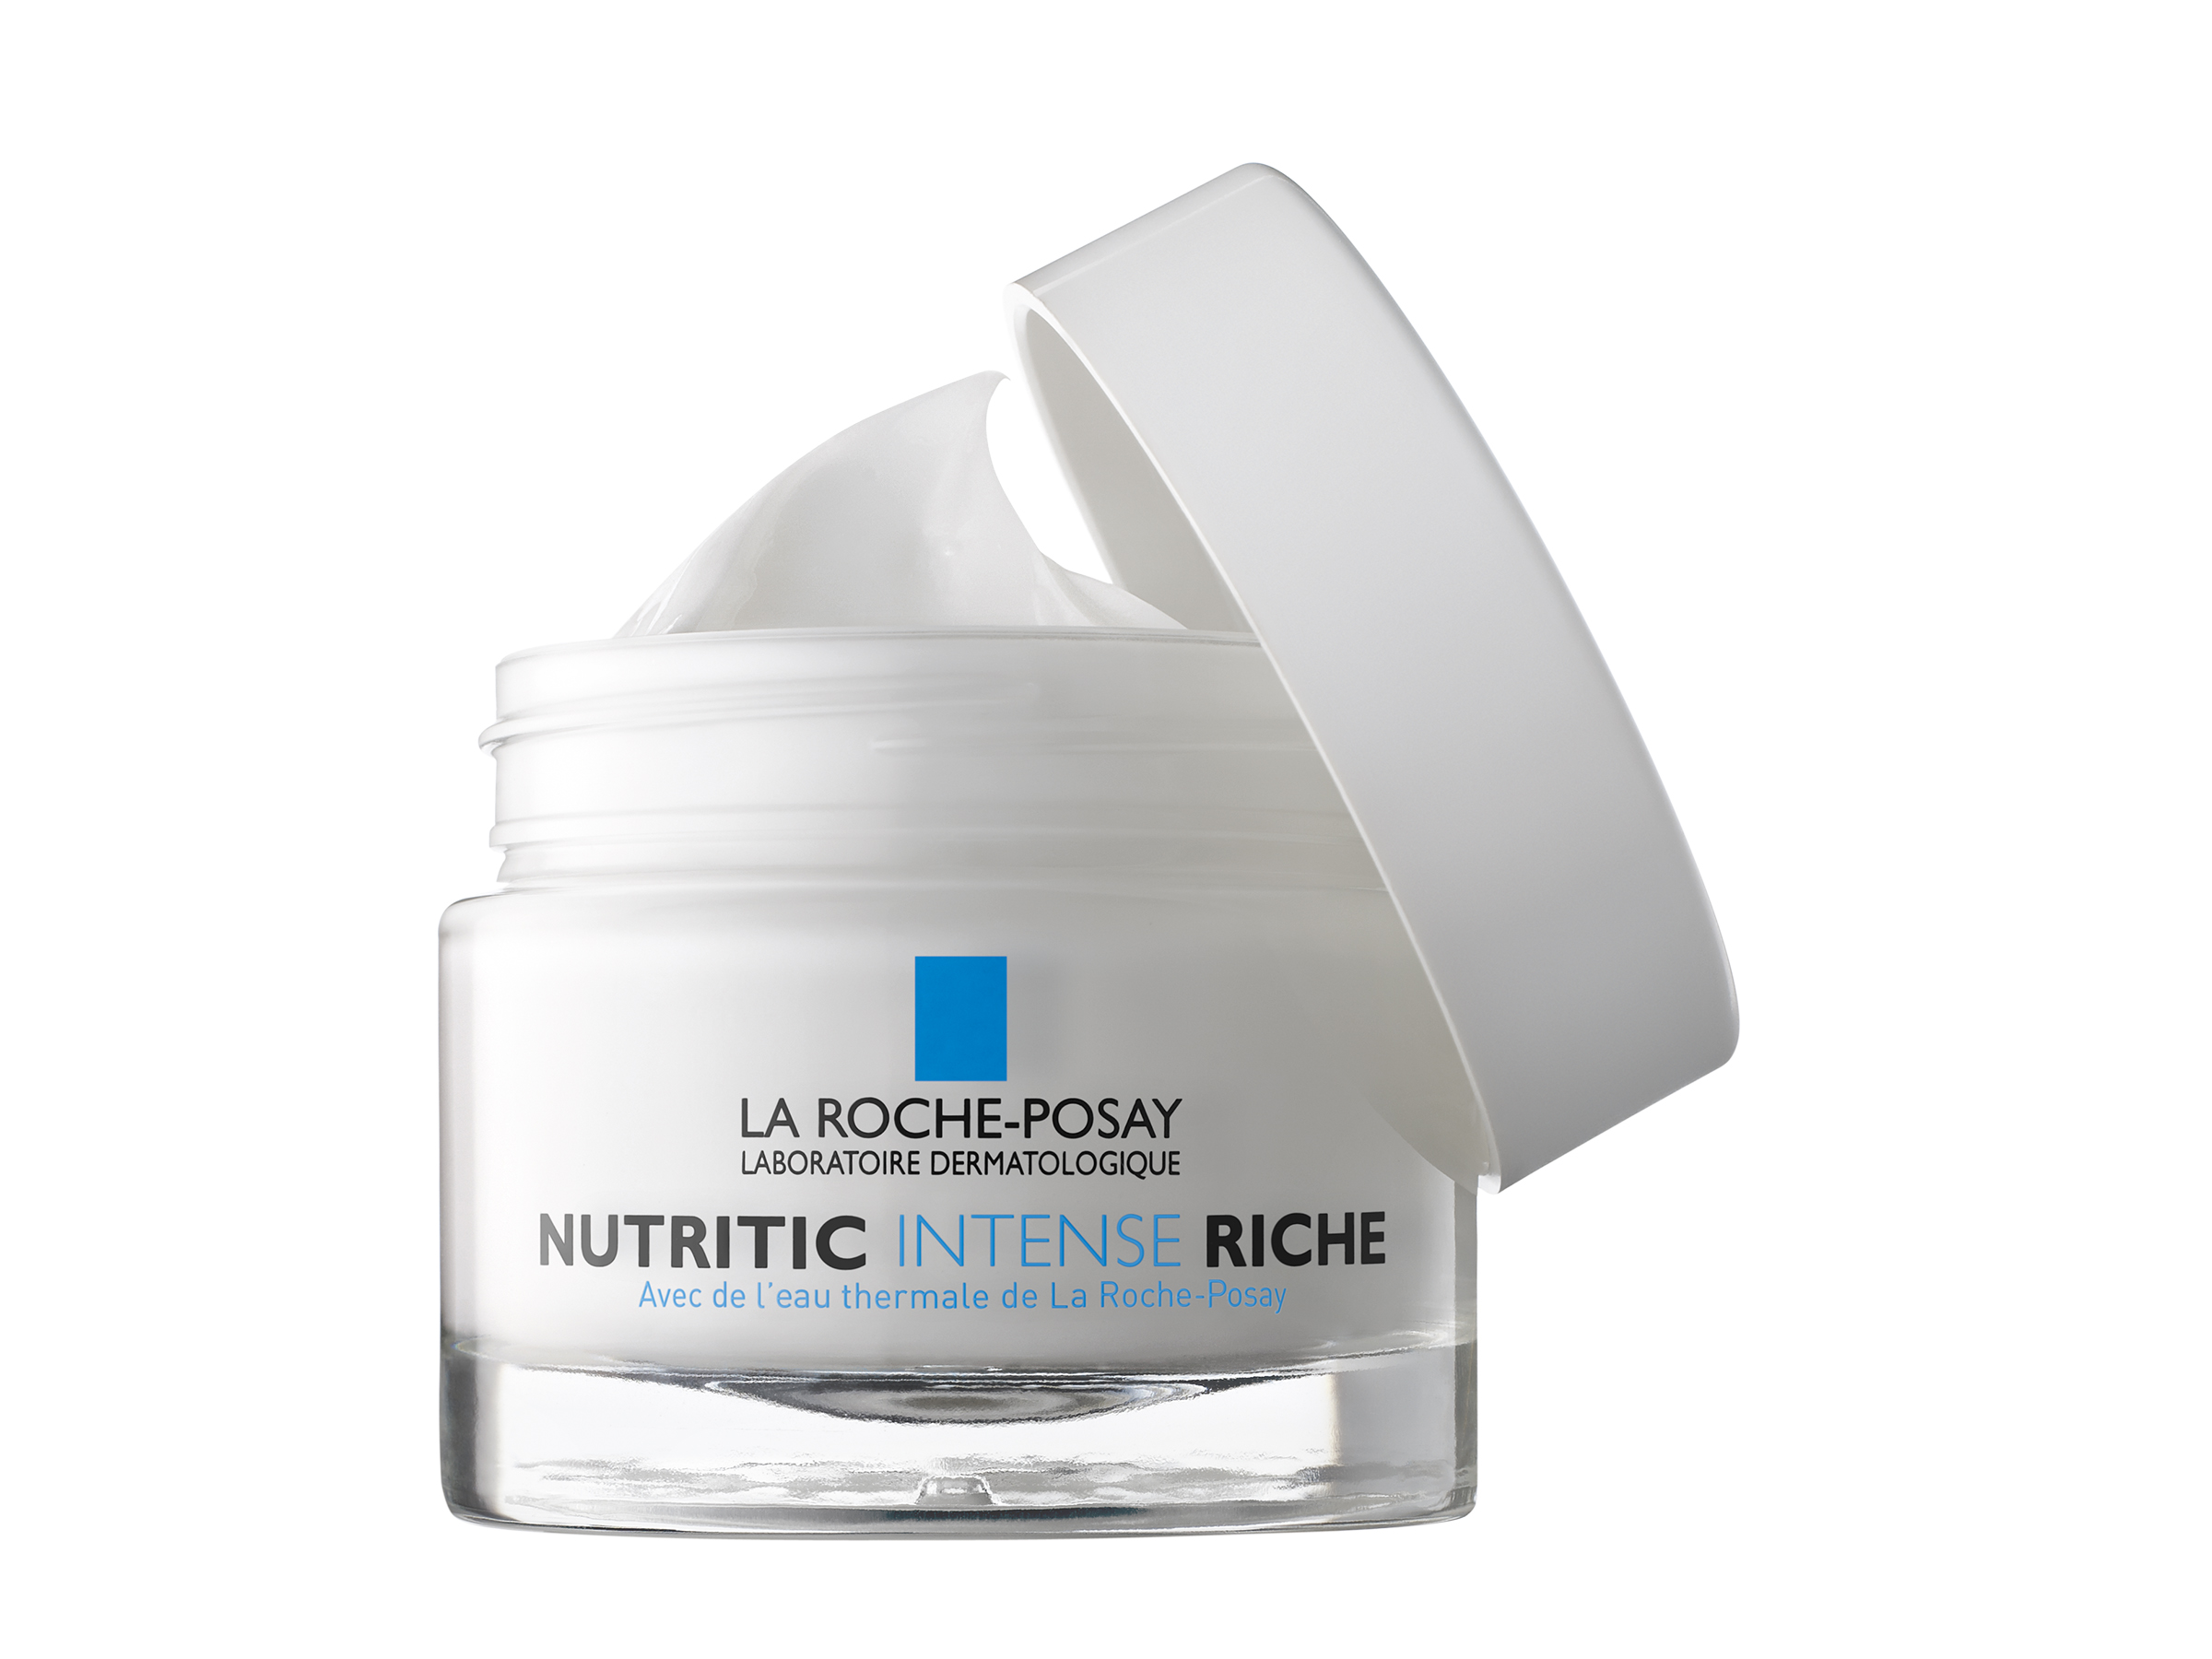 La Roche-Posay Nutritic intense rich, Meget tørr hud, 50 ml